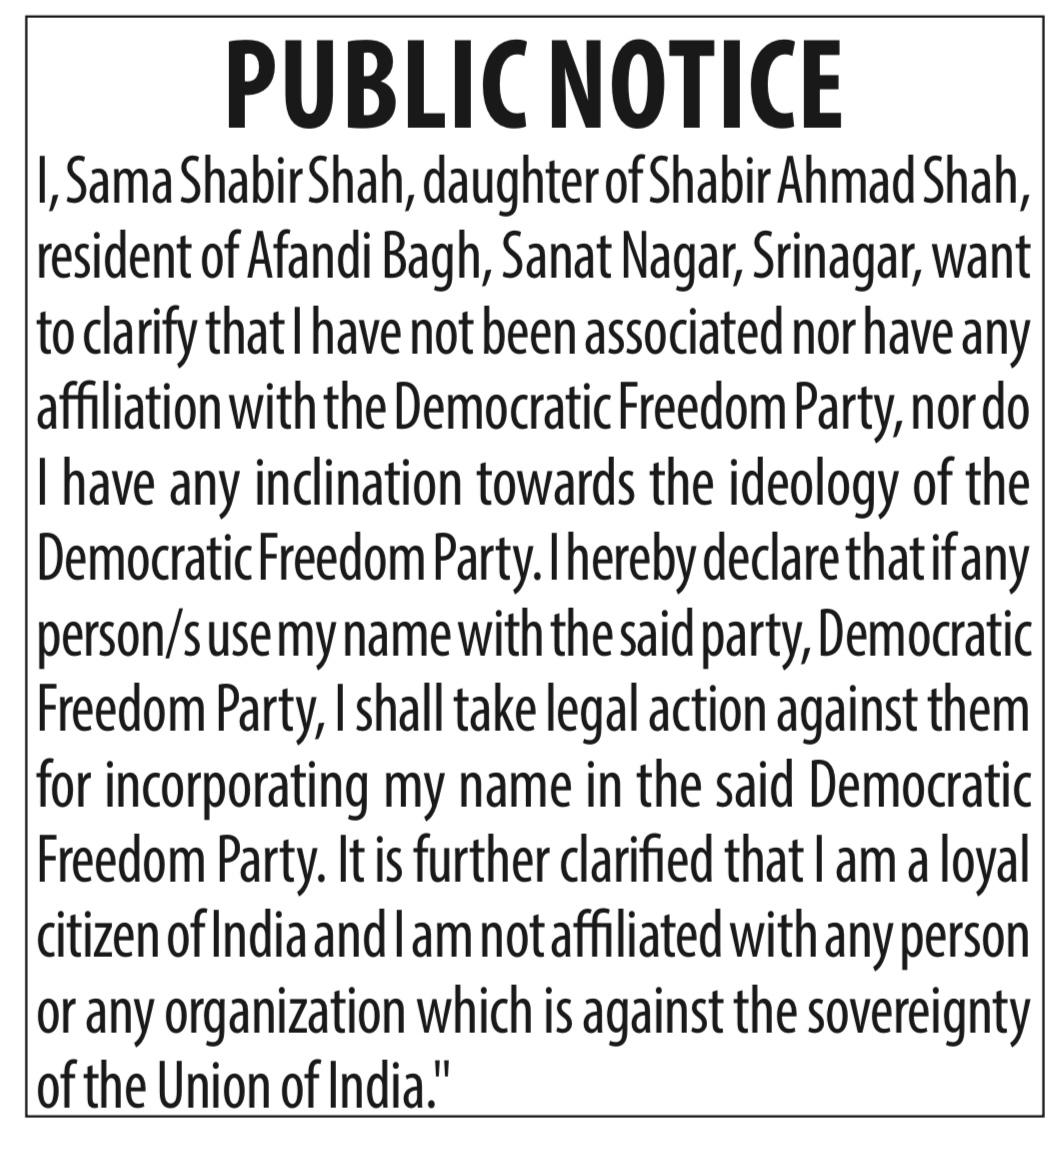 Public notice by Sama Shabir declaring loyalty to India